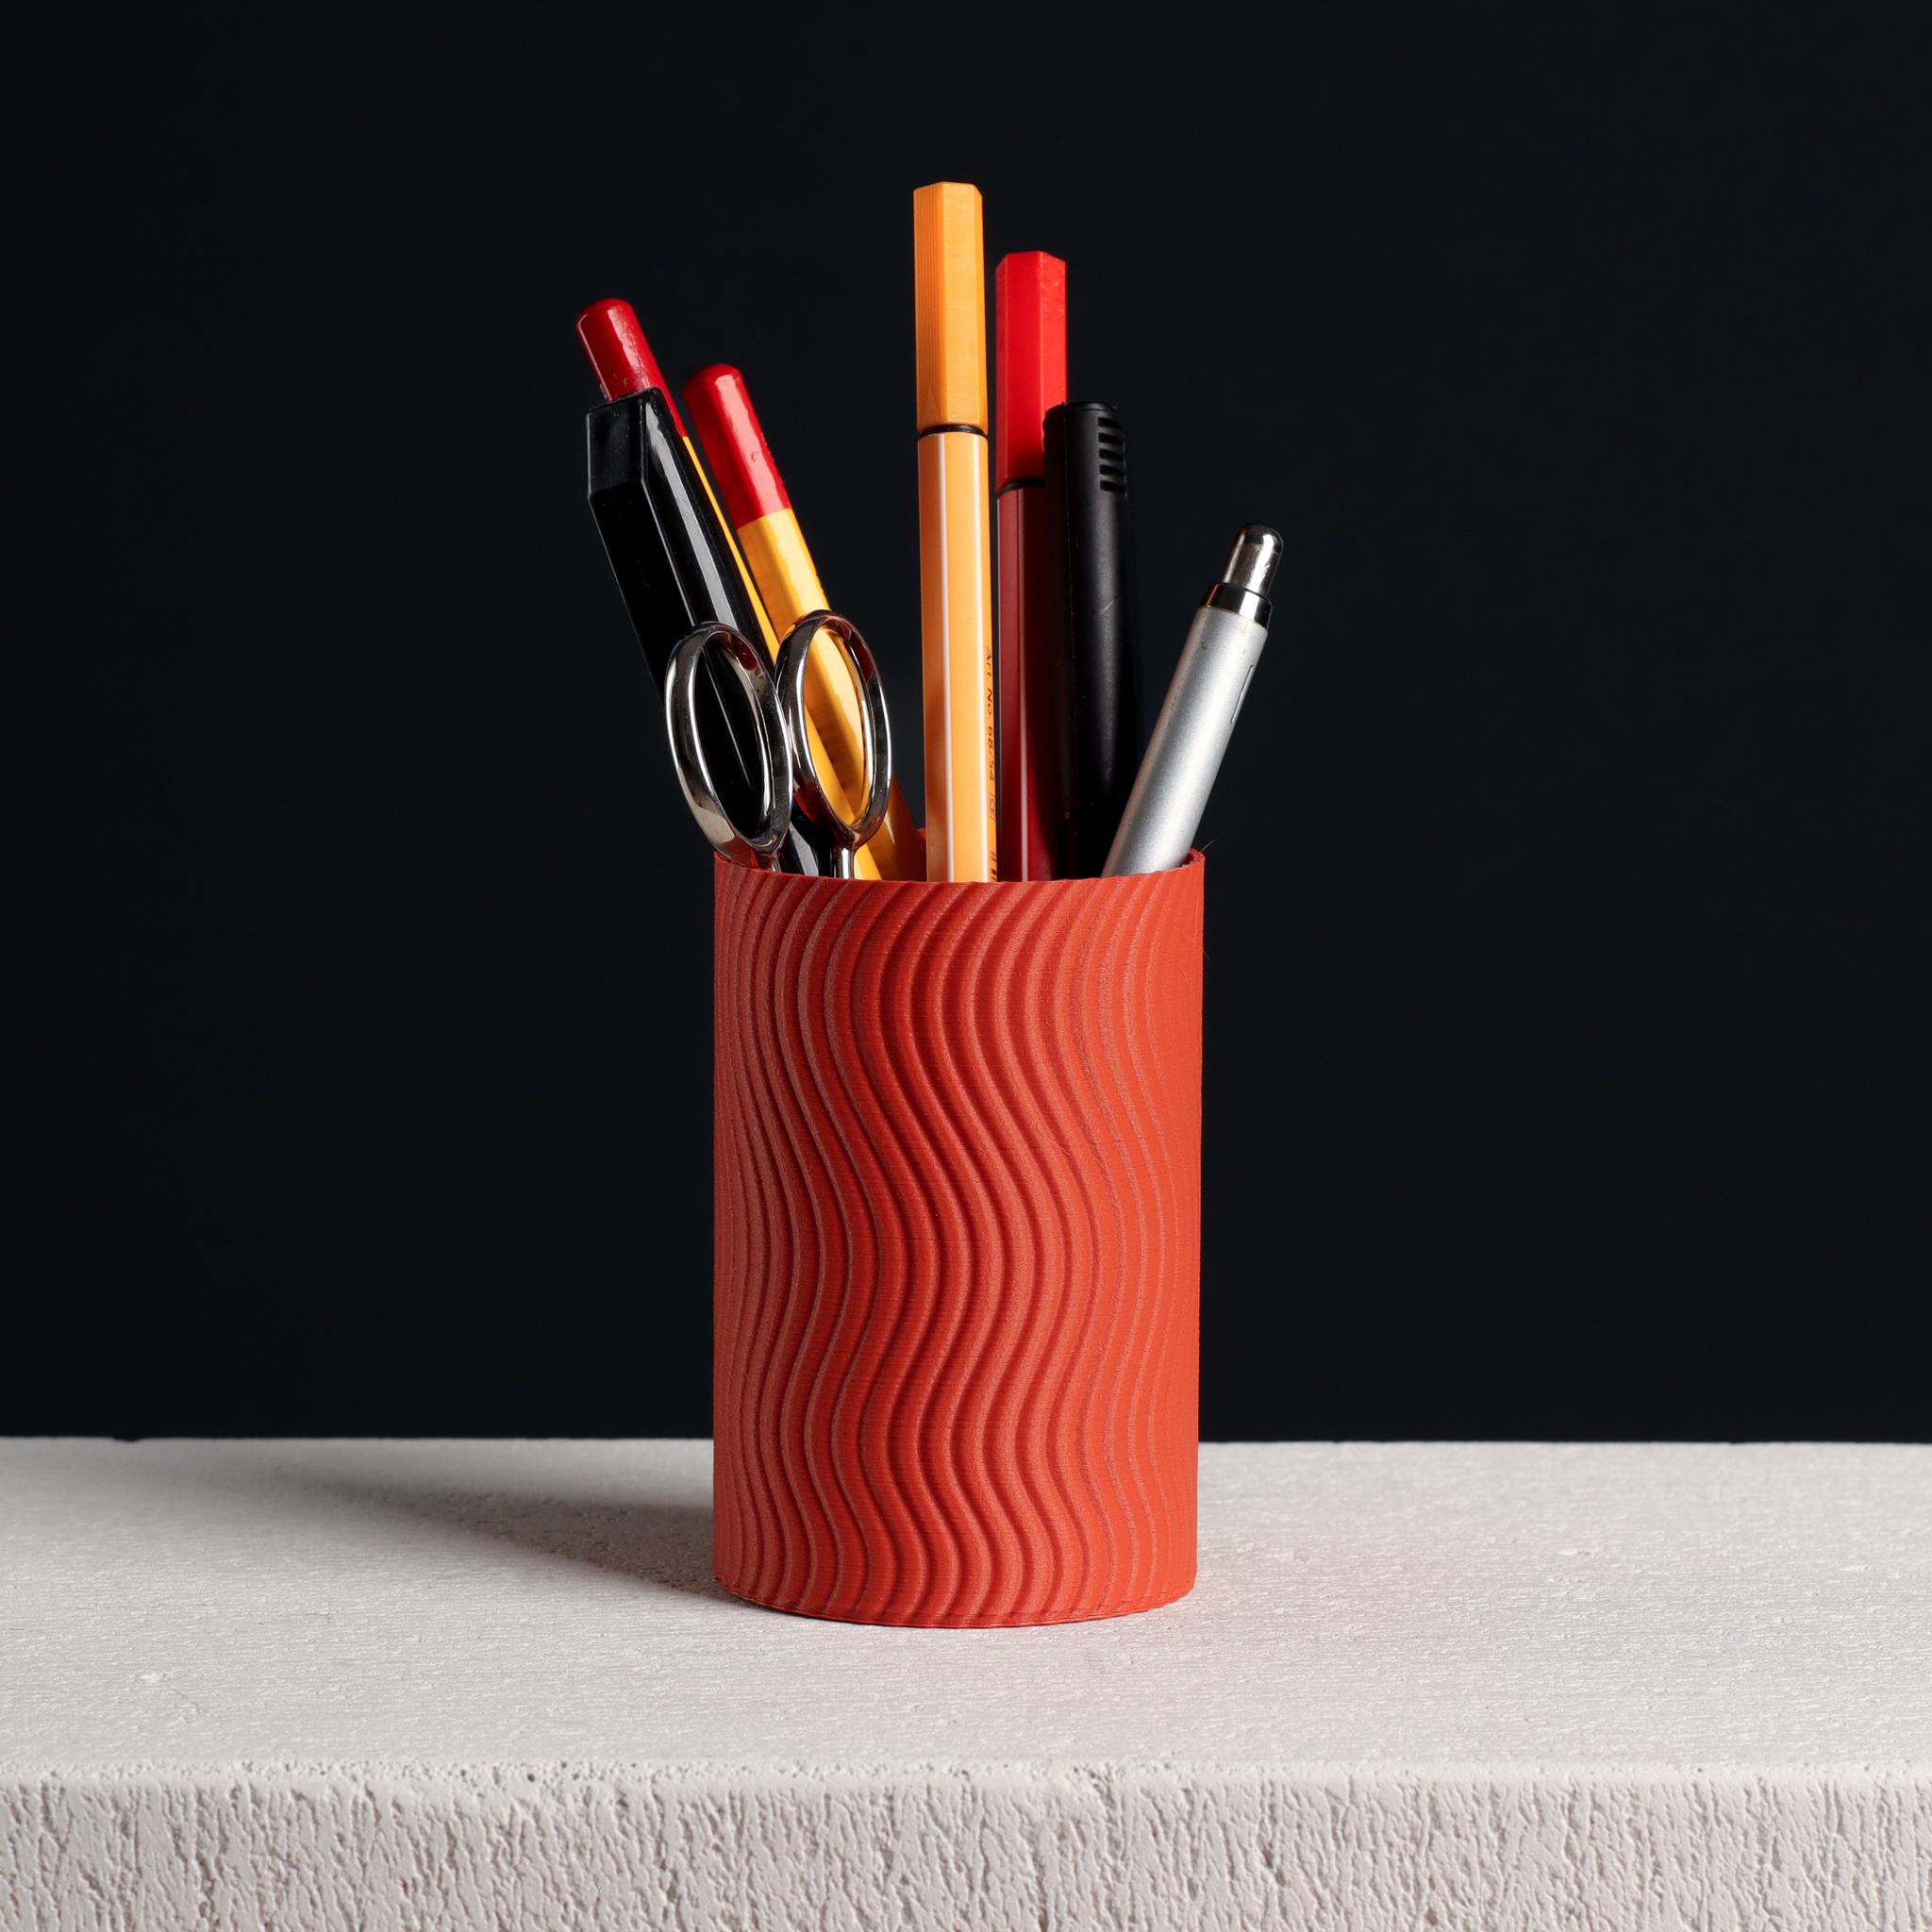  Wavy Pencil Holder (vase mode)  3d model